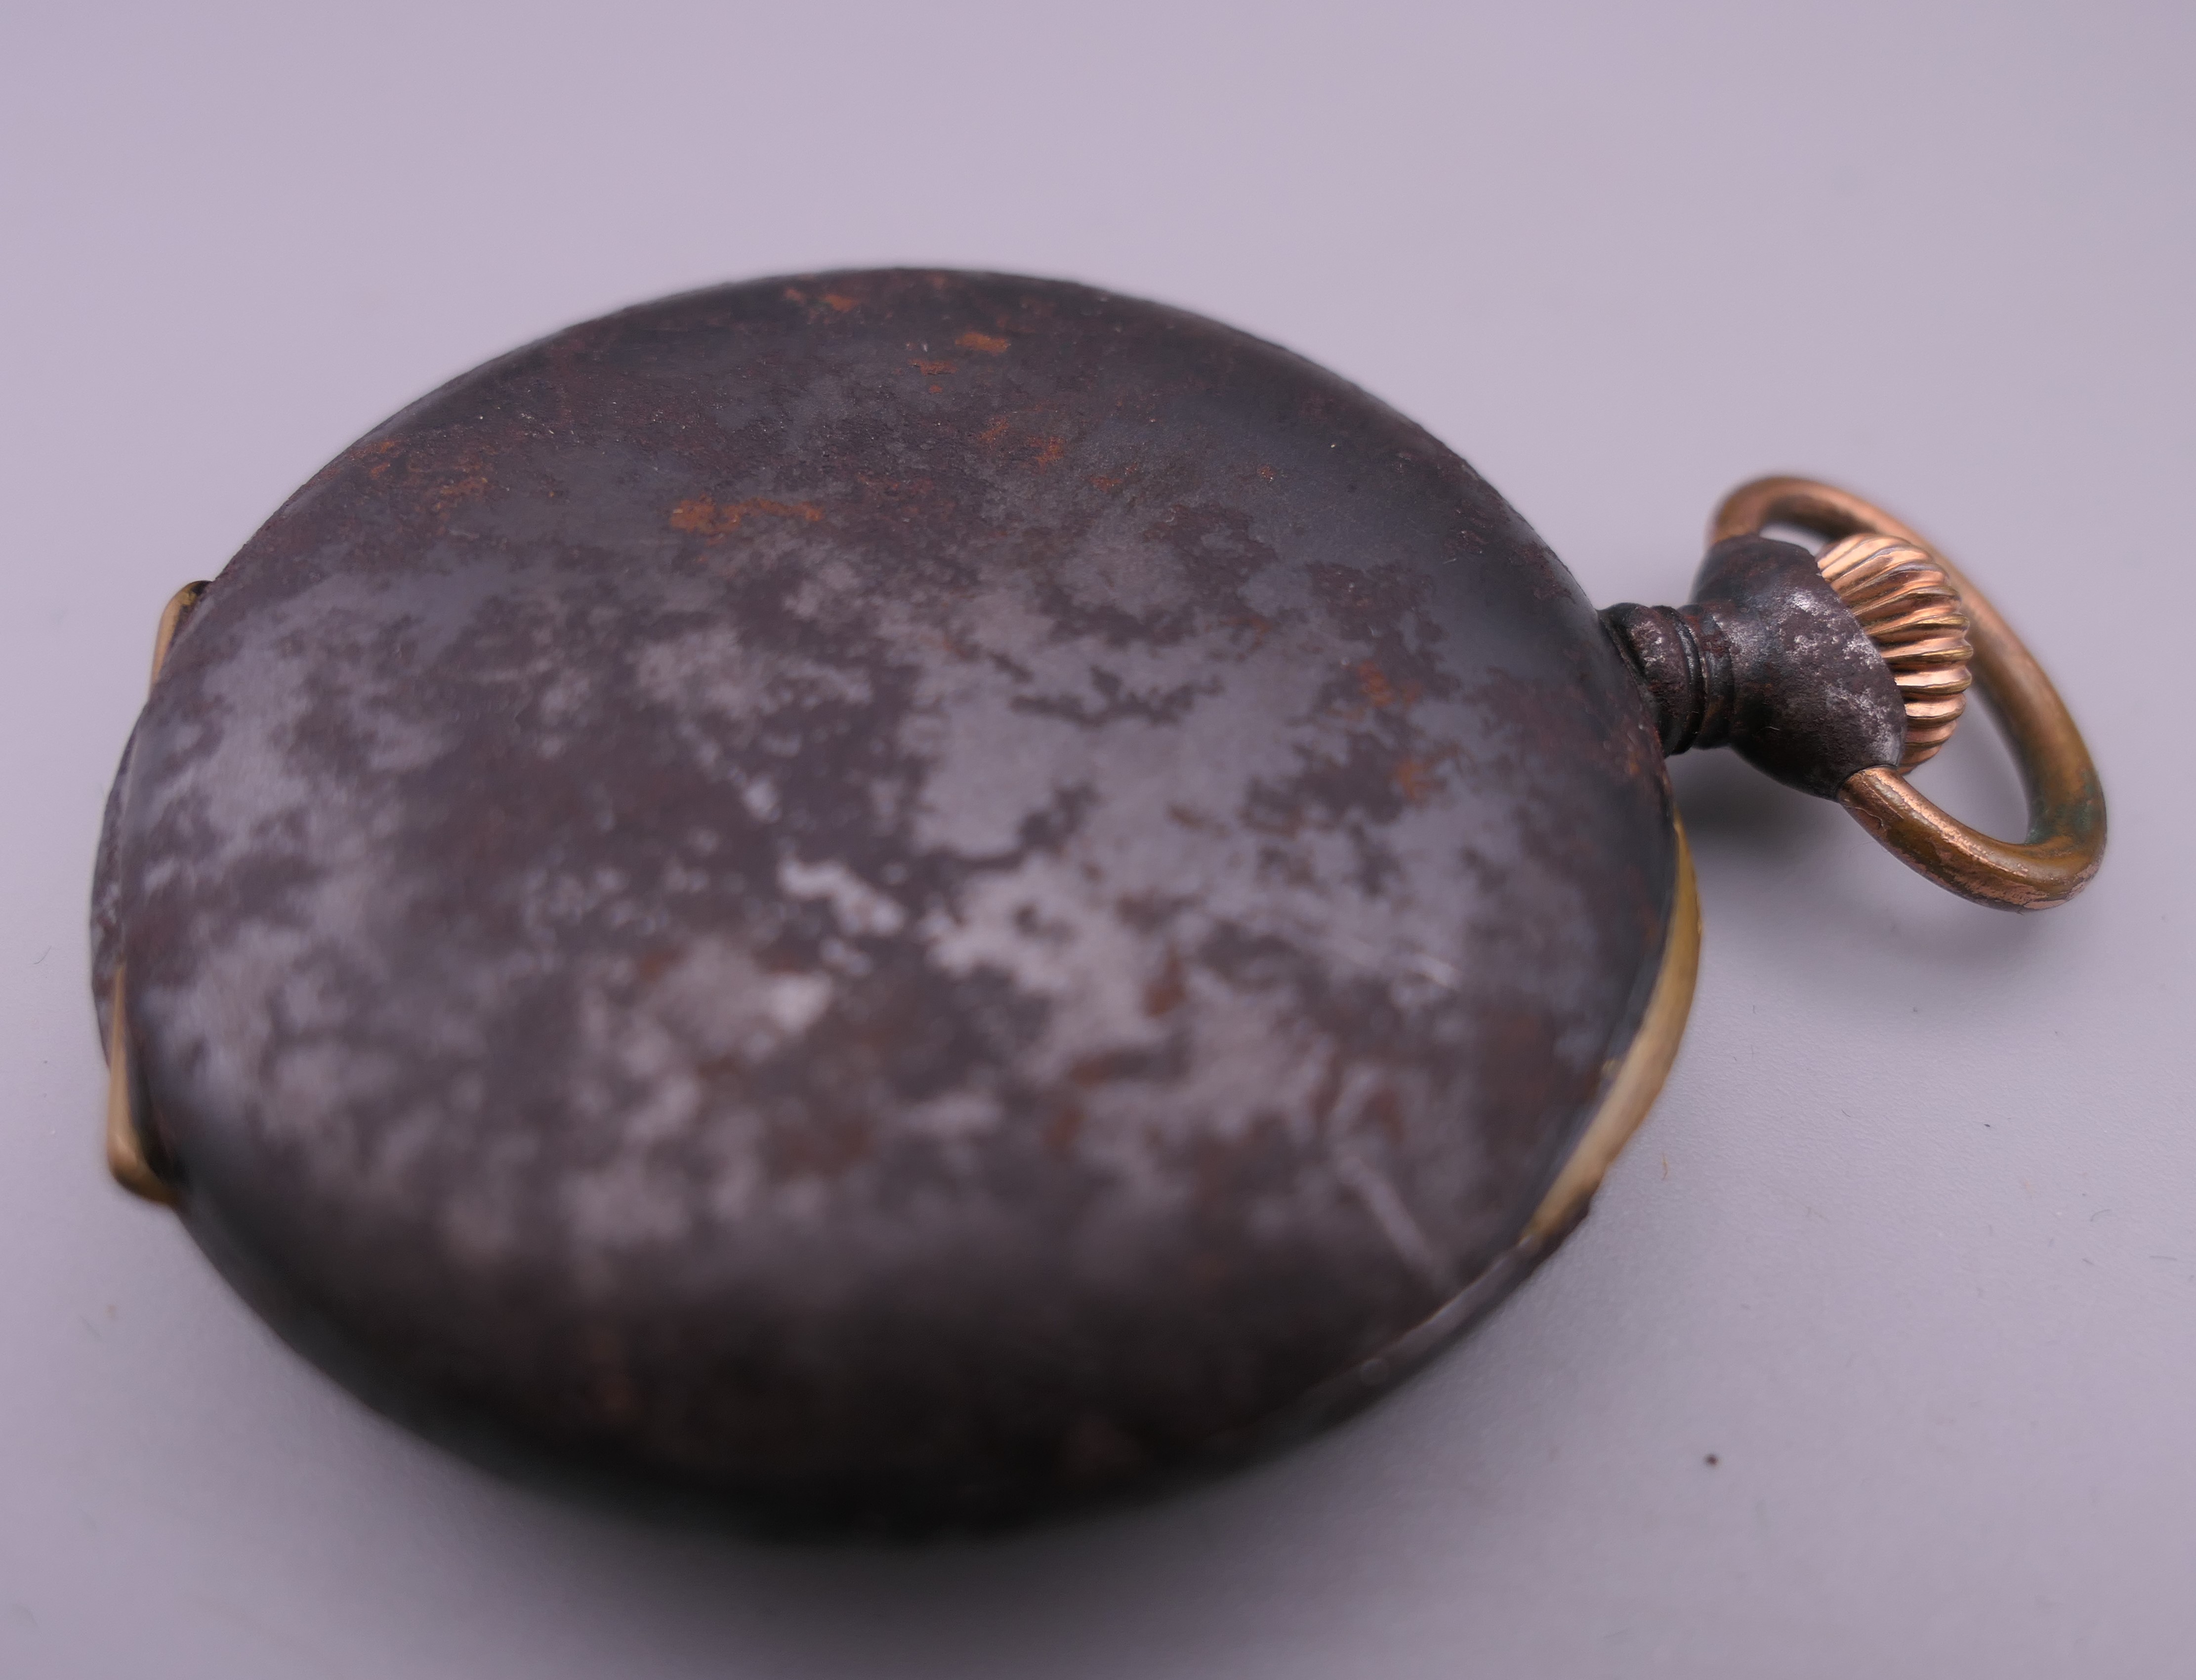 A Zenith Chronometer pocket watch in gun metal, with 24 hour dial. 5 cm diameter. - Bild 3 aus 6